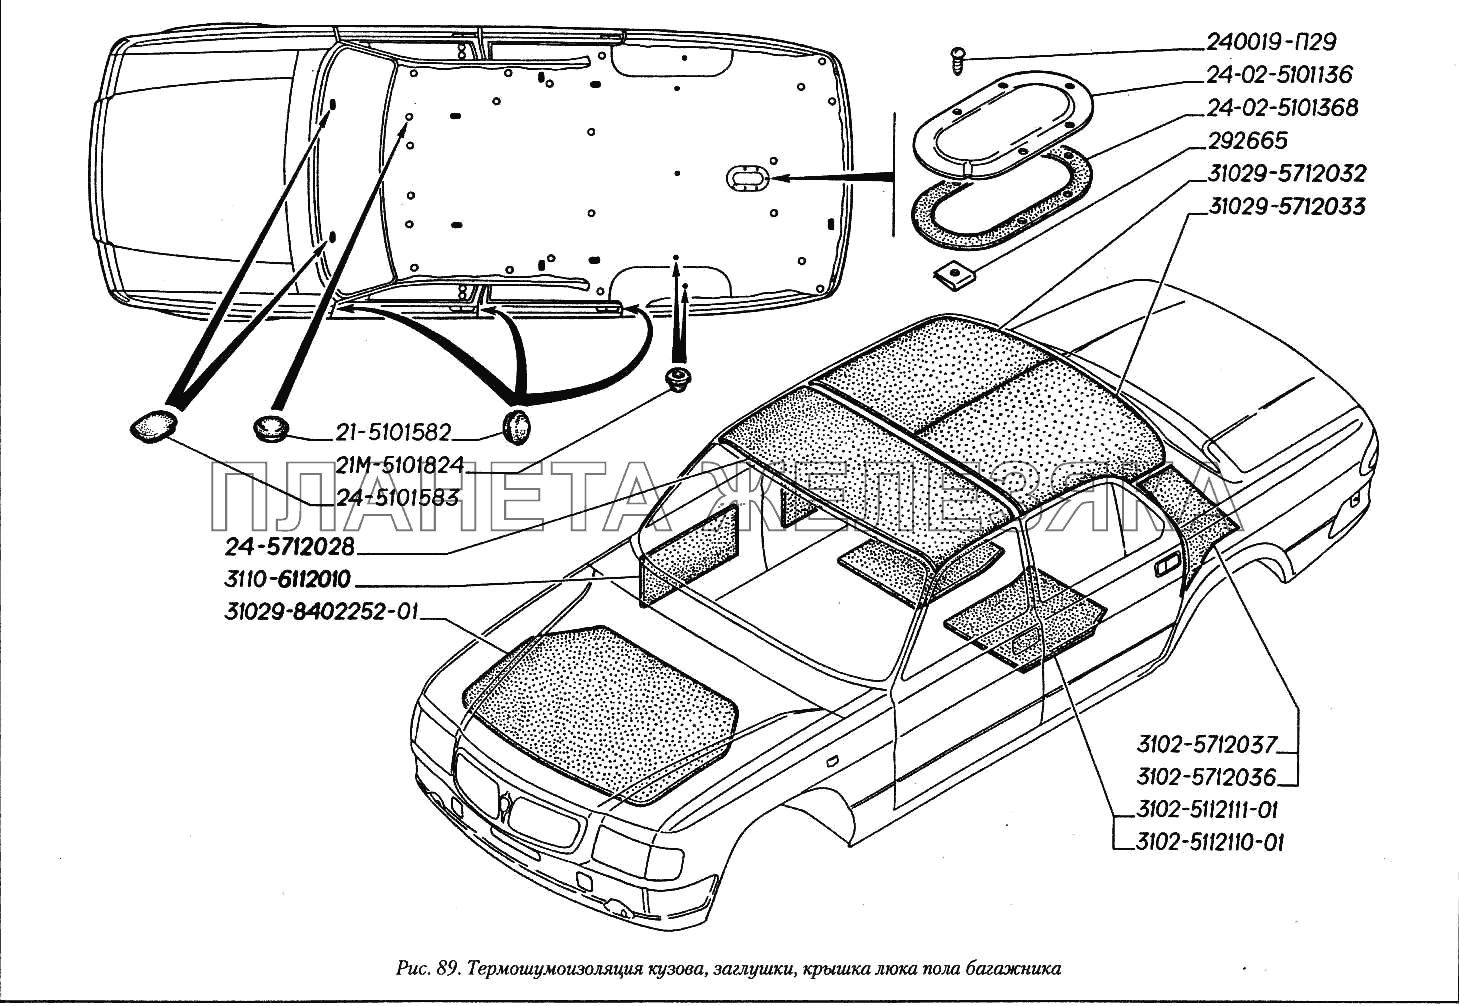 Термошумоизоляция кузова, заглушки, крышка люка пола багажника ГАЗ-3110